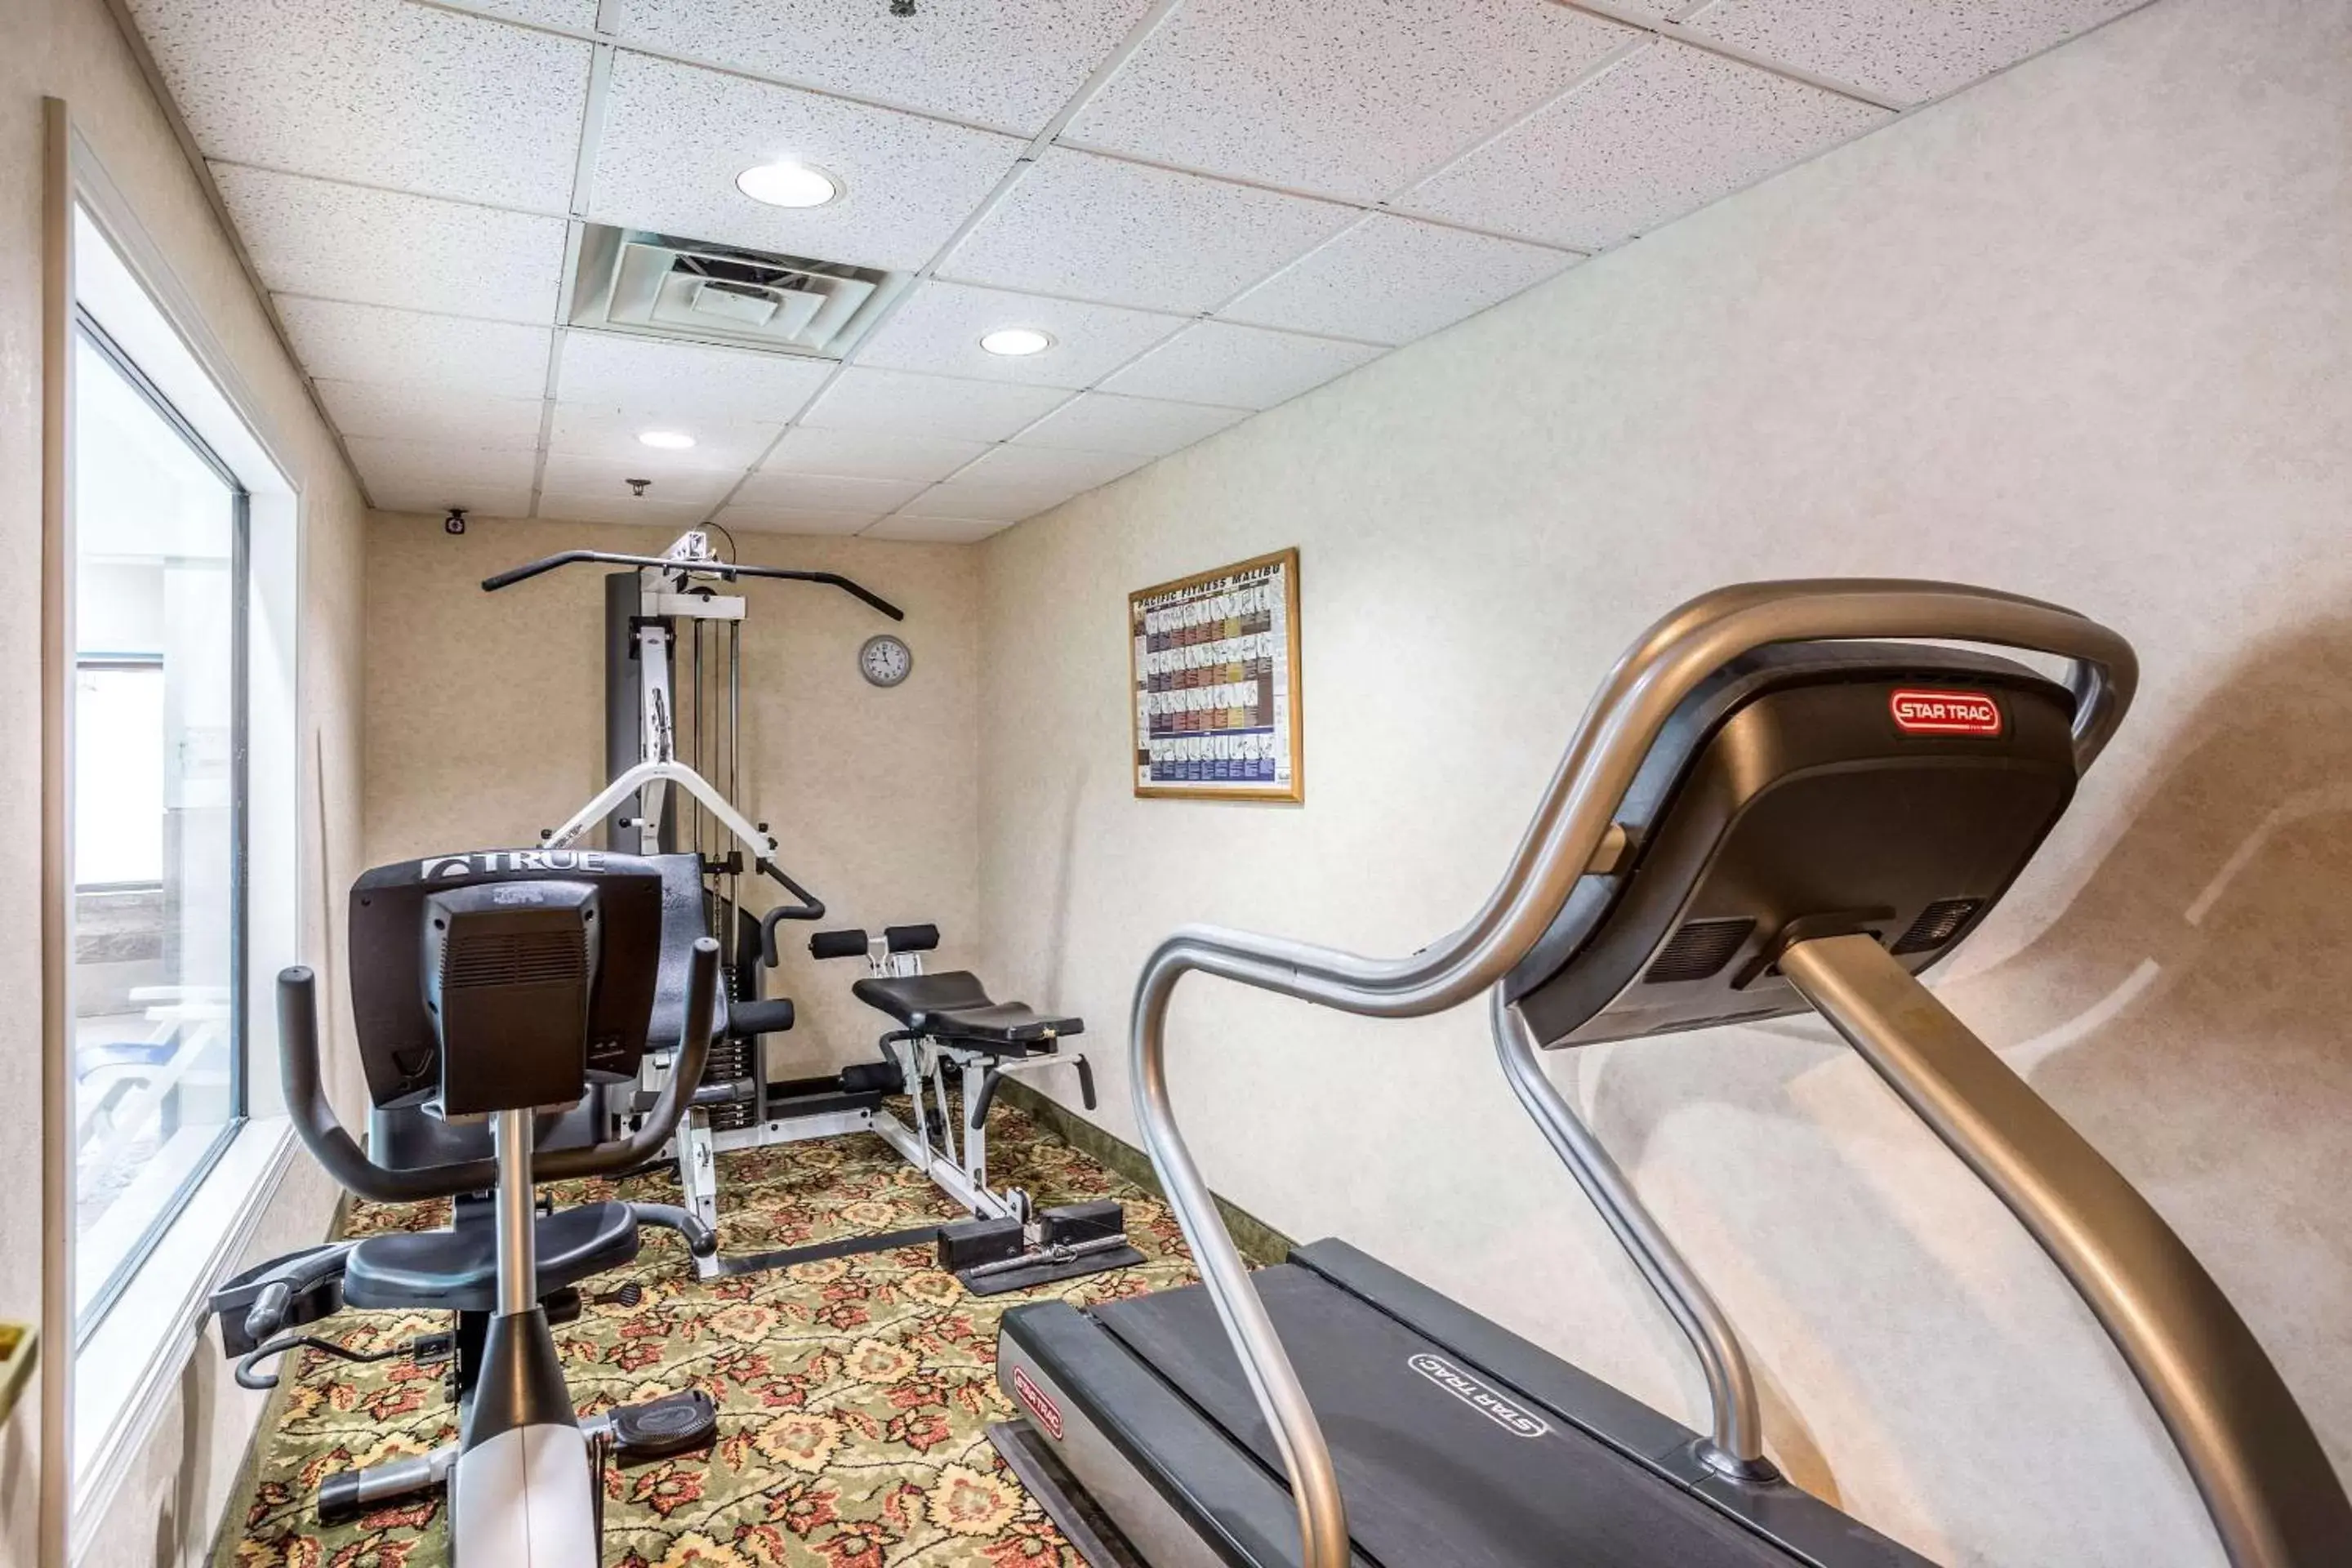 Fitness centre/facilities, Fitness Center/Facilities in Sleep Inn Owensboro